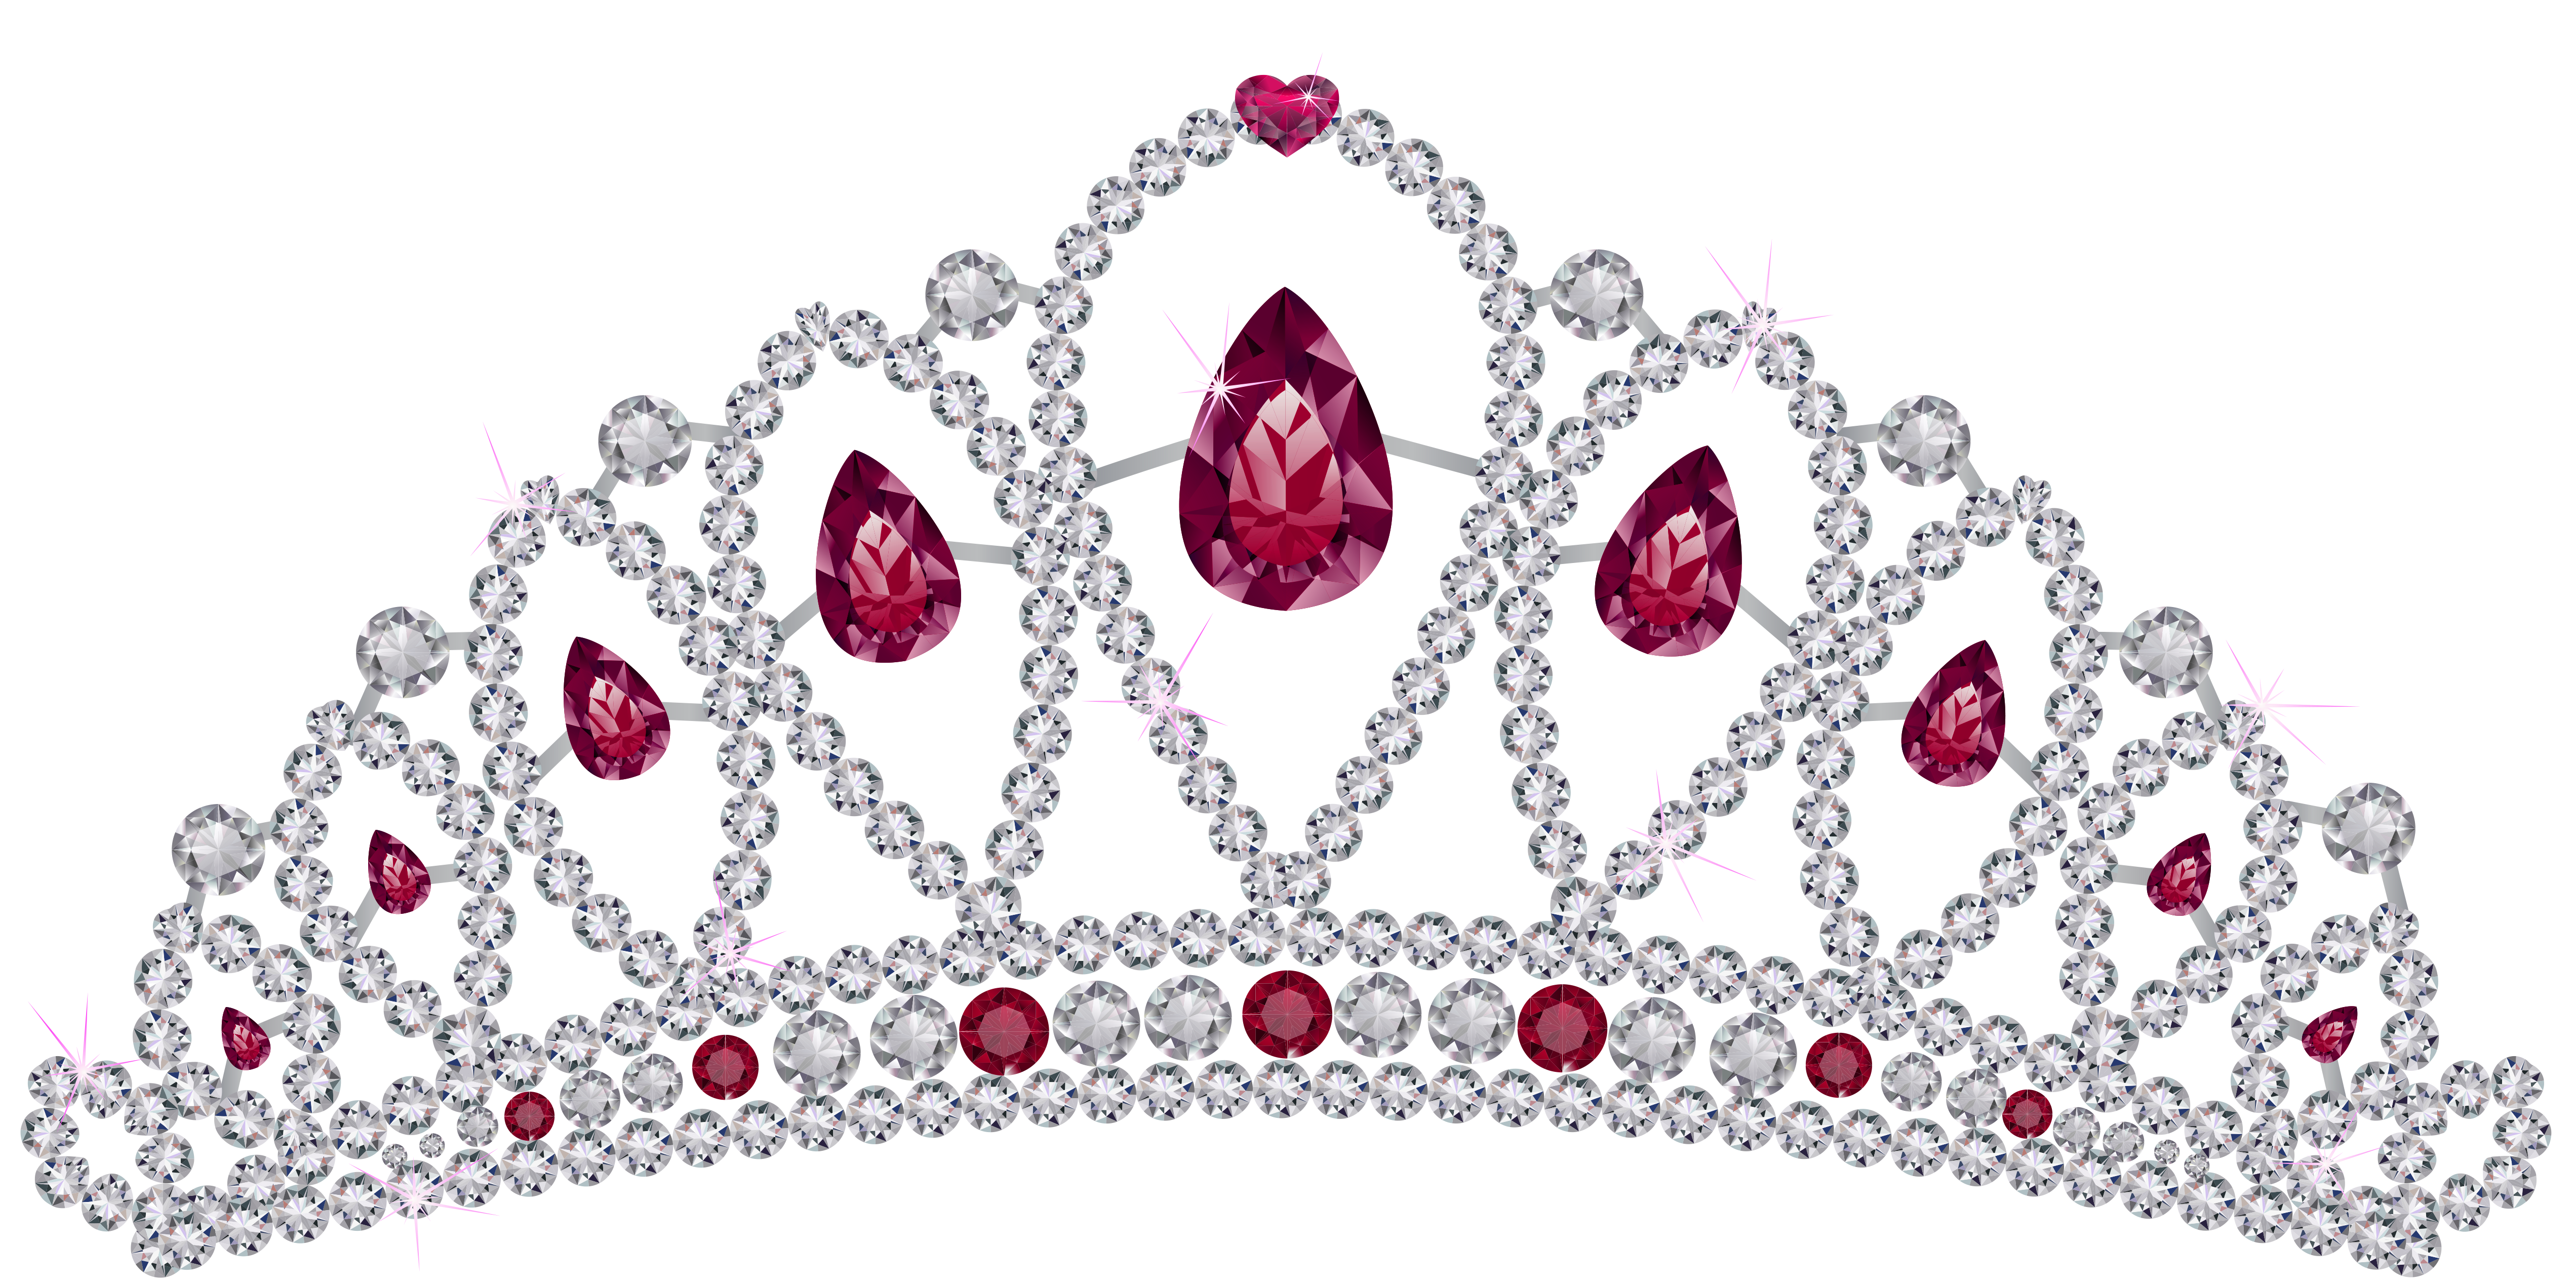 Diamond tiara with rubies. Clipart crown happy birthday